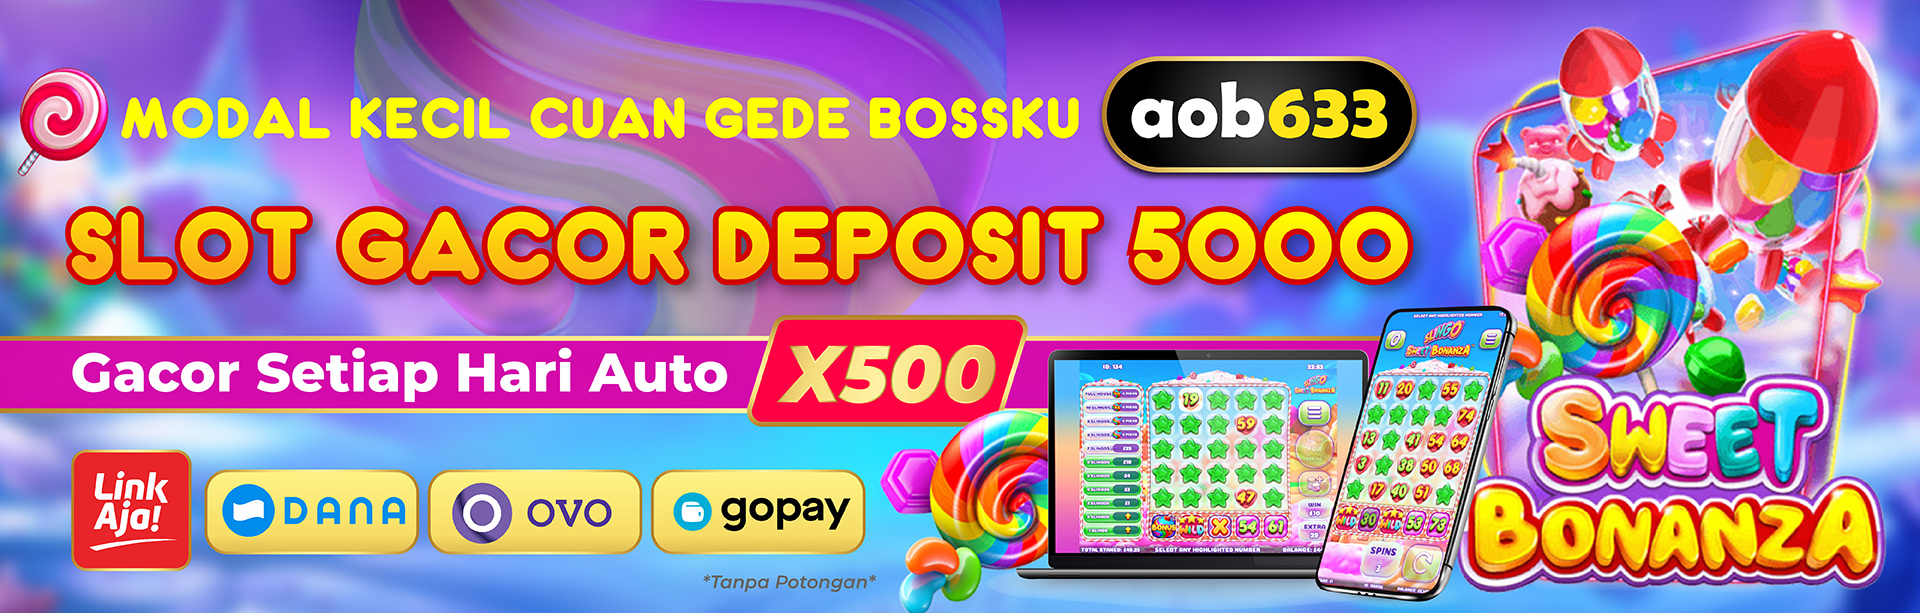 Slot Gacor Deposit 5000 AOB633